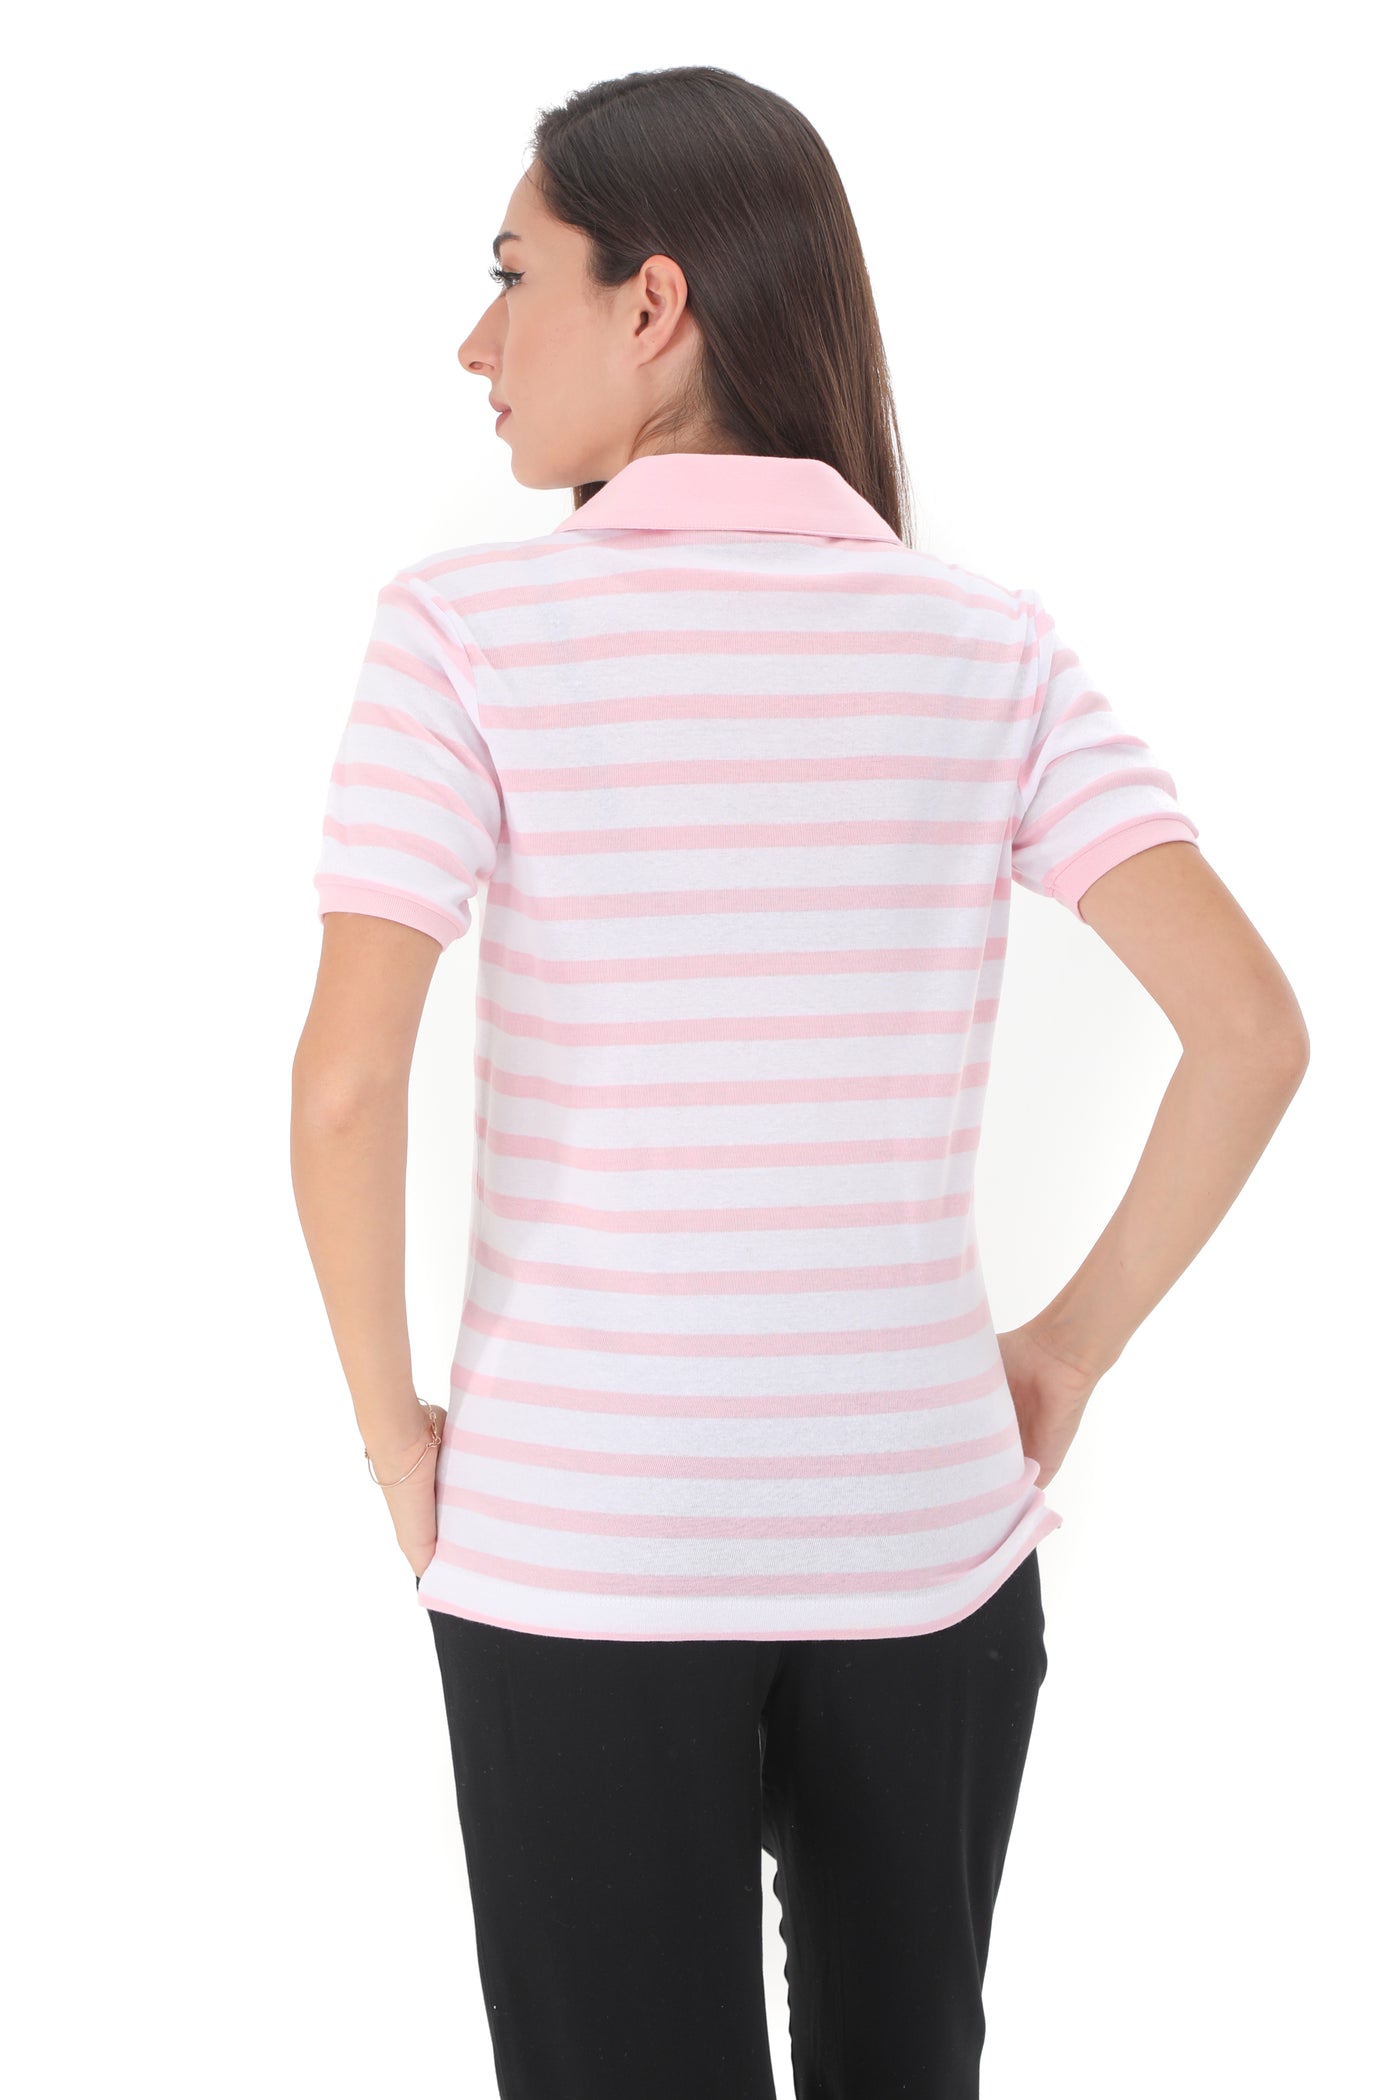 Chassca Polo Collar Short Sleeve T-Shirt